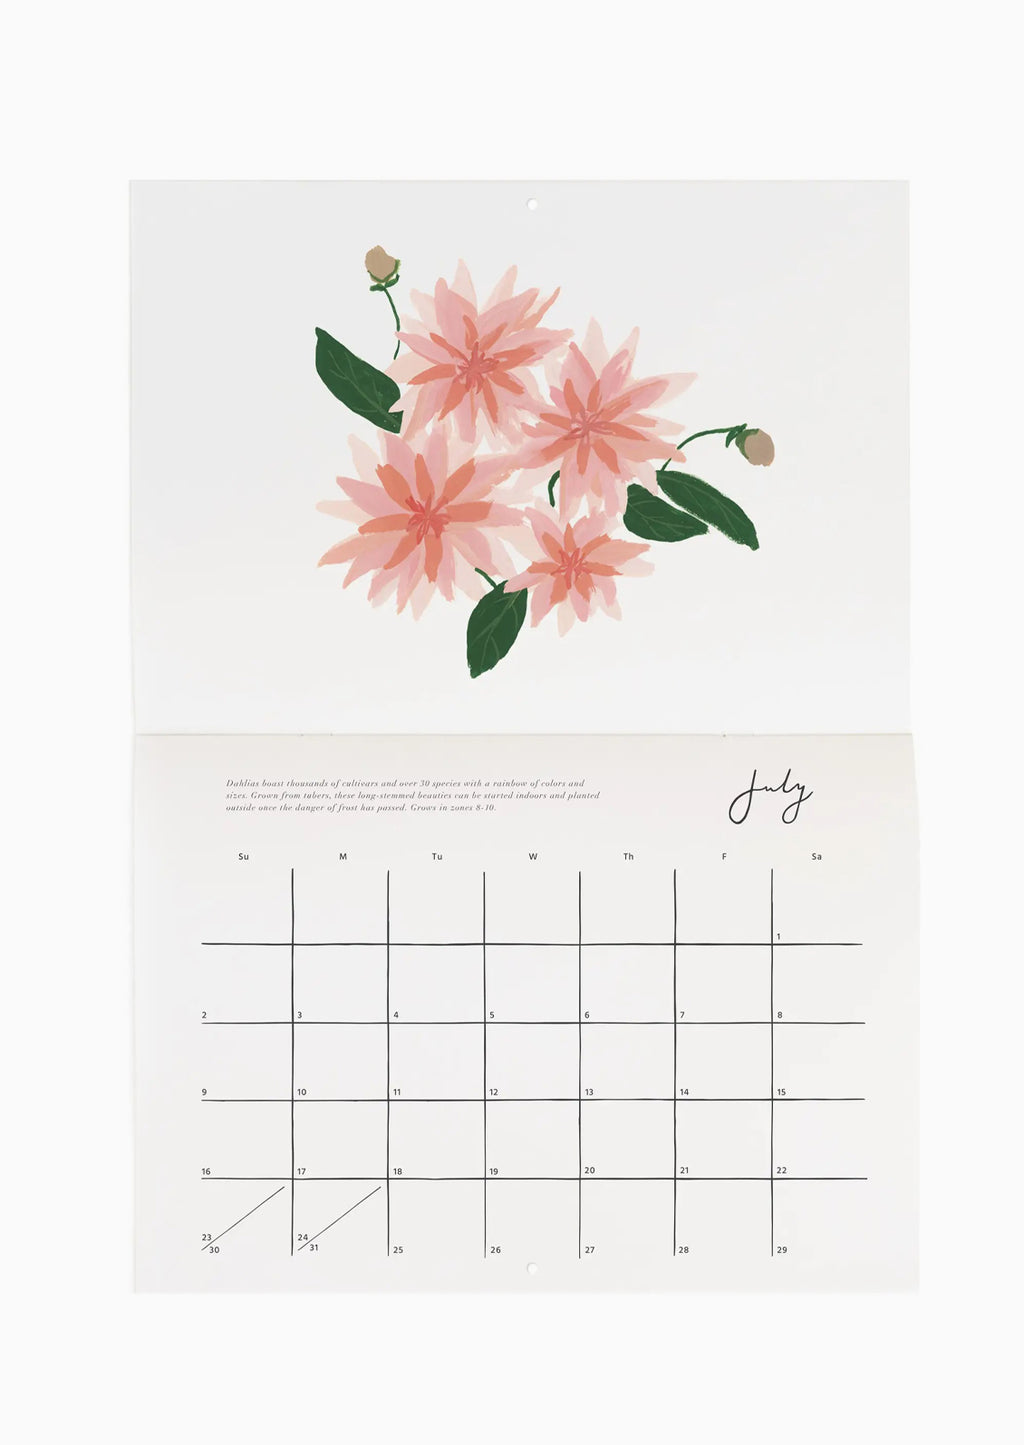 2: A floral wall calendar for 2023.